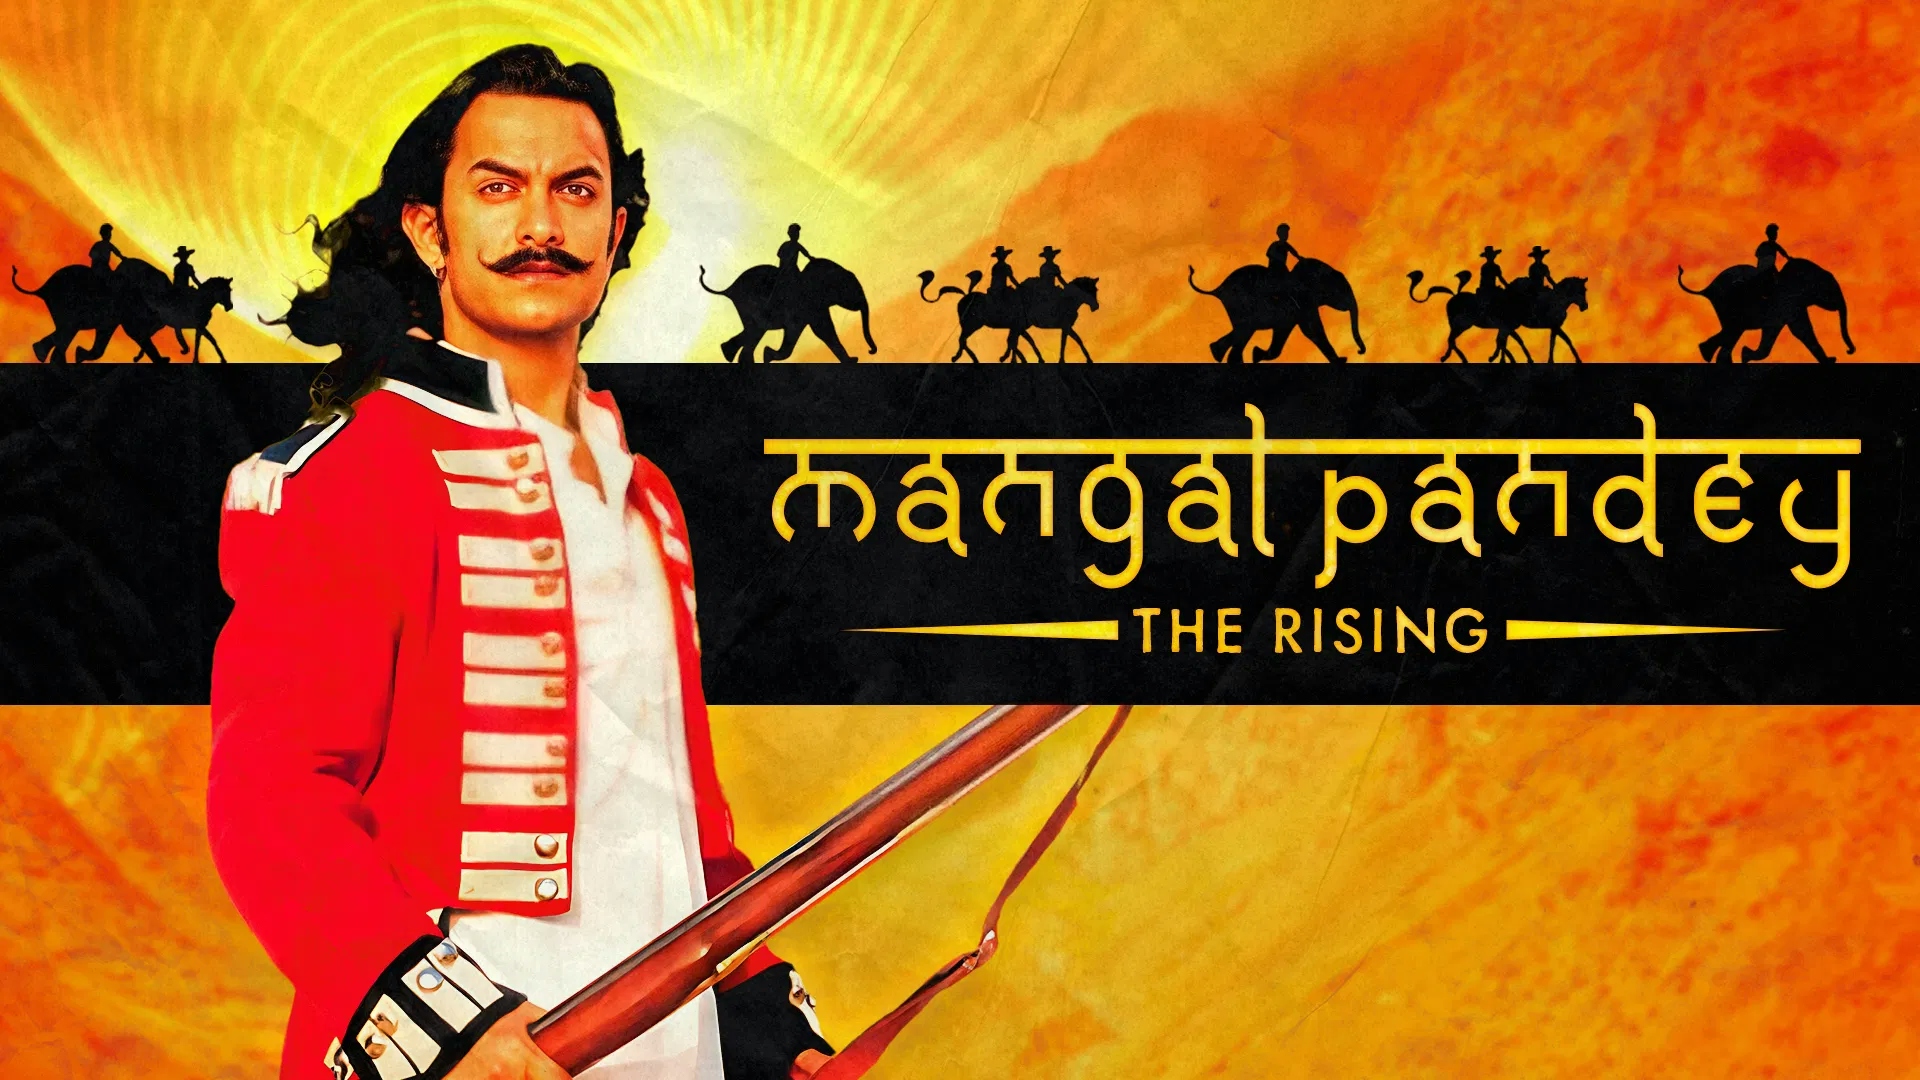 Mangal Pandey - The Rising